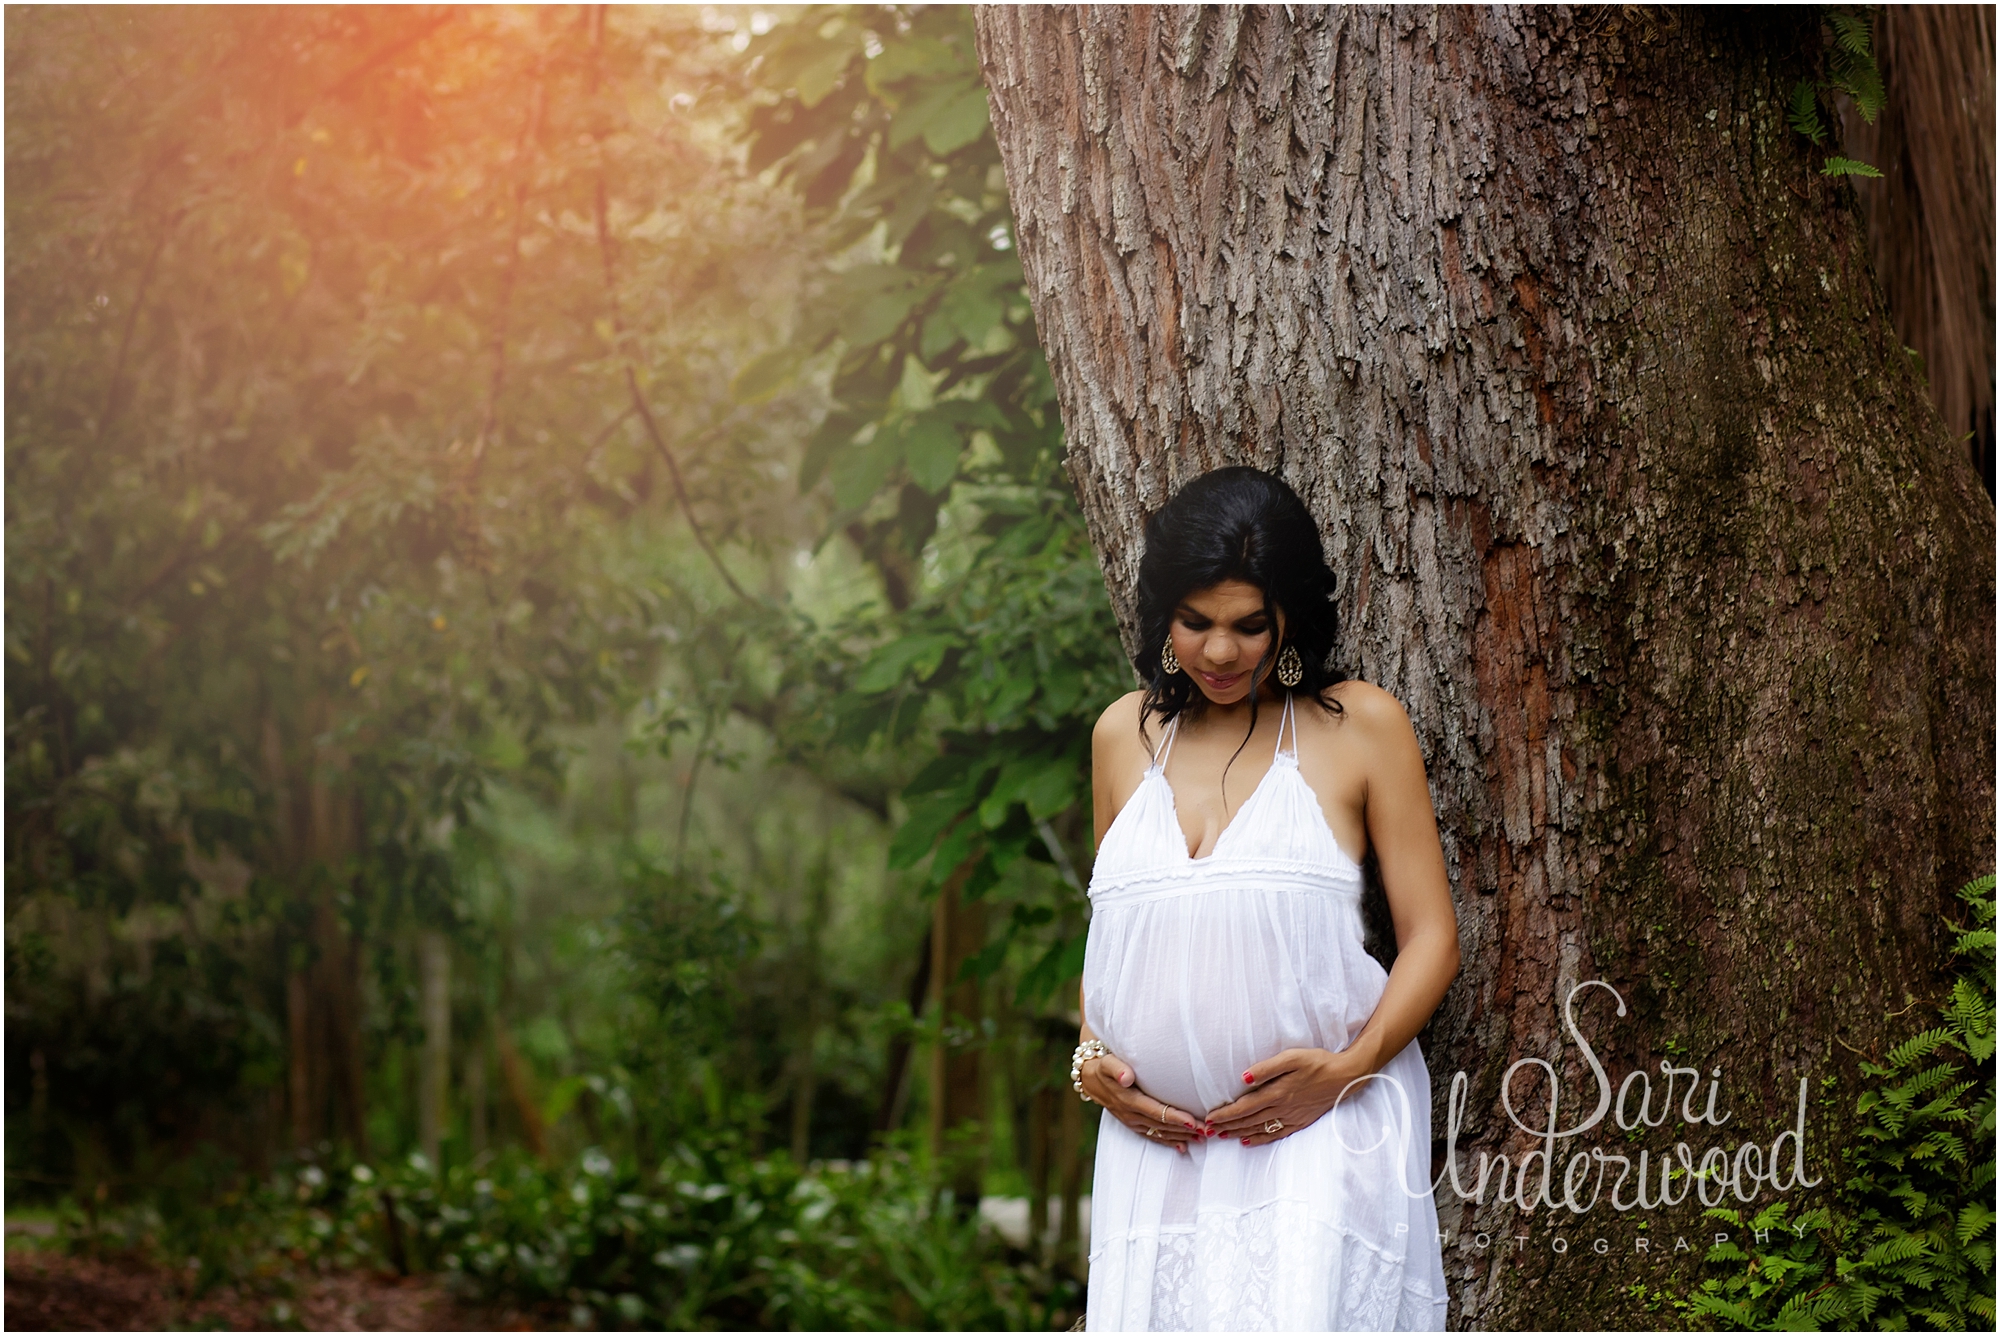 Orlando maternity photographer | Expecting a prince